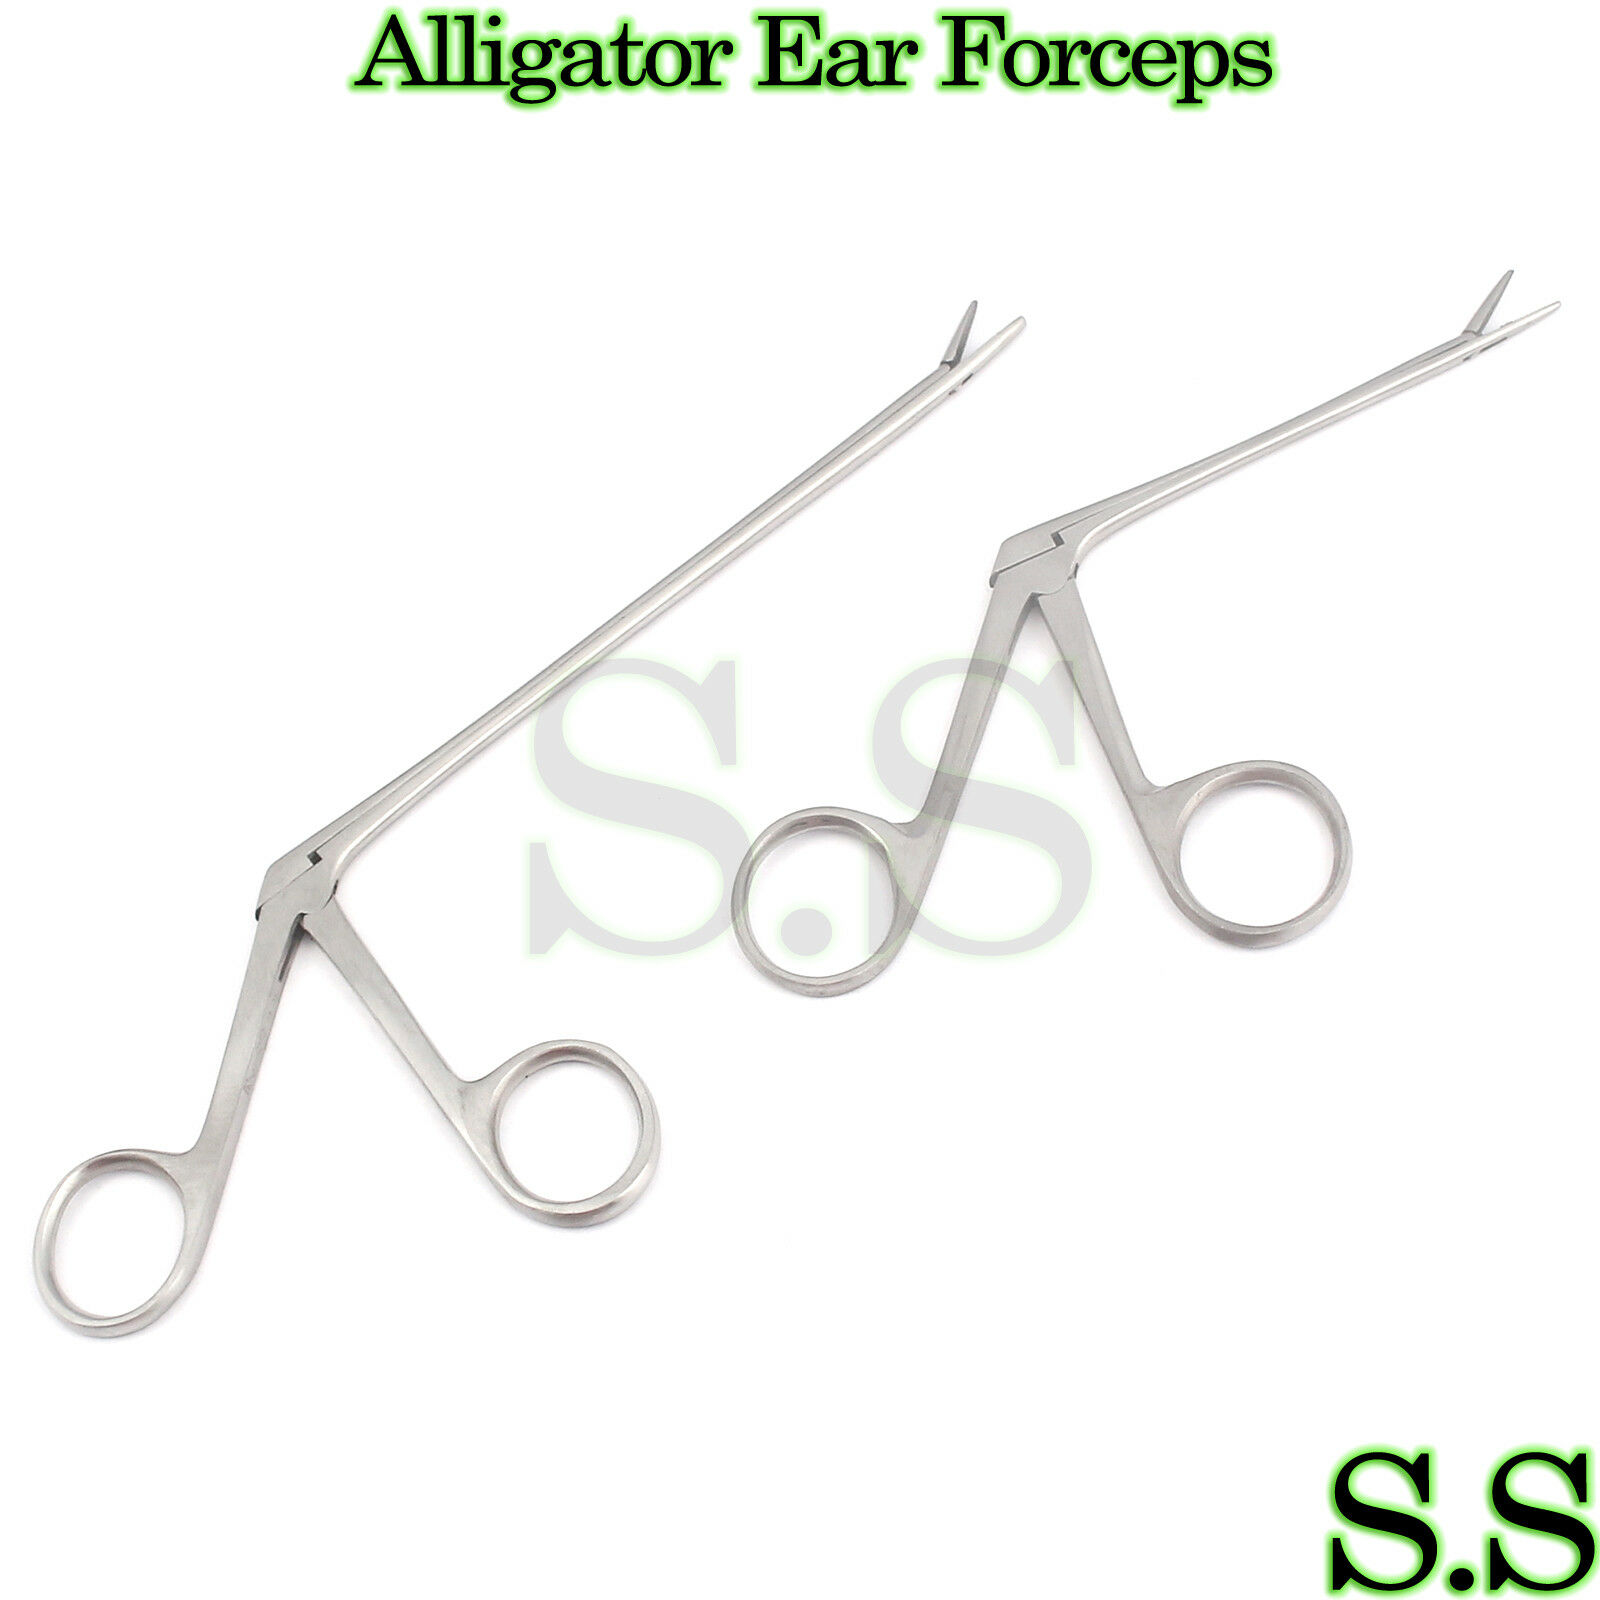 2 Hartman Alligator Ear Forceps Serrated 3.5'' 5.5''ent Surgical Instruments